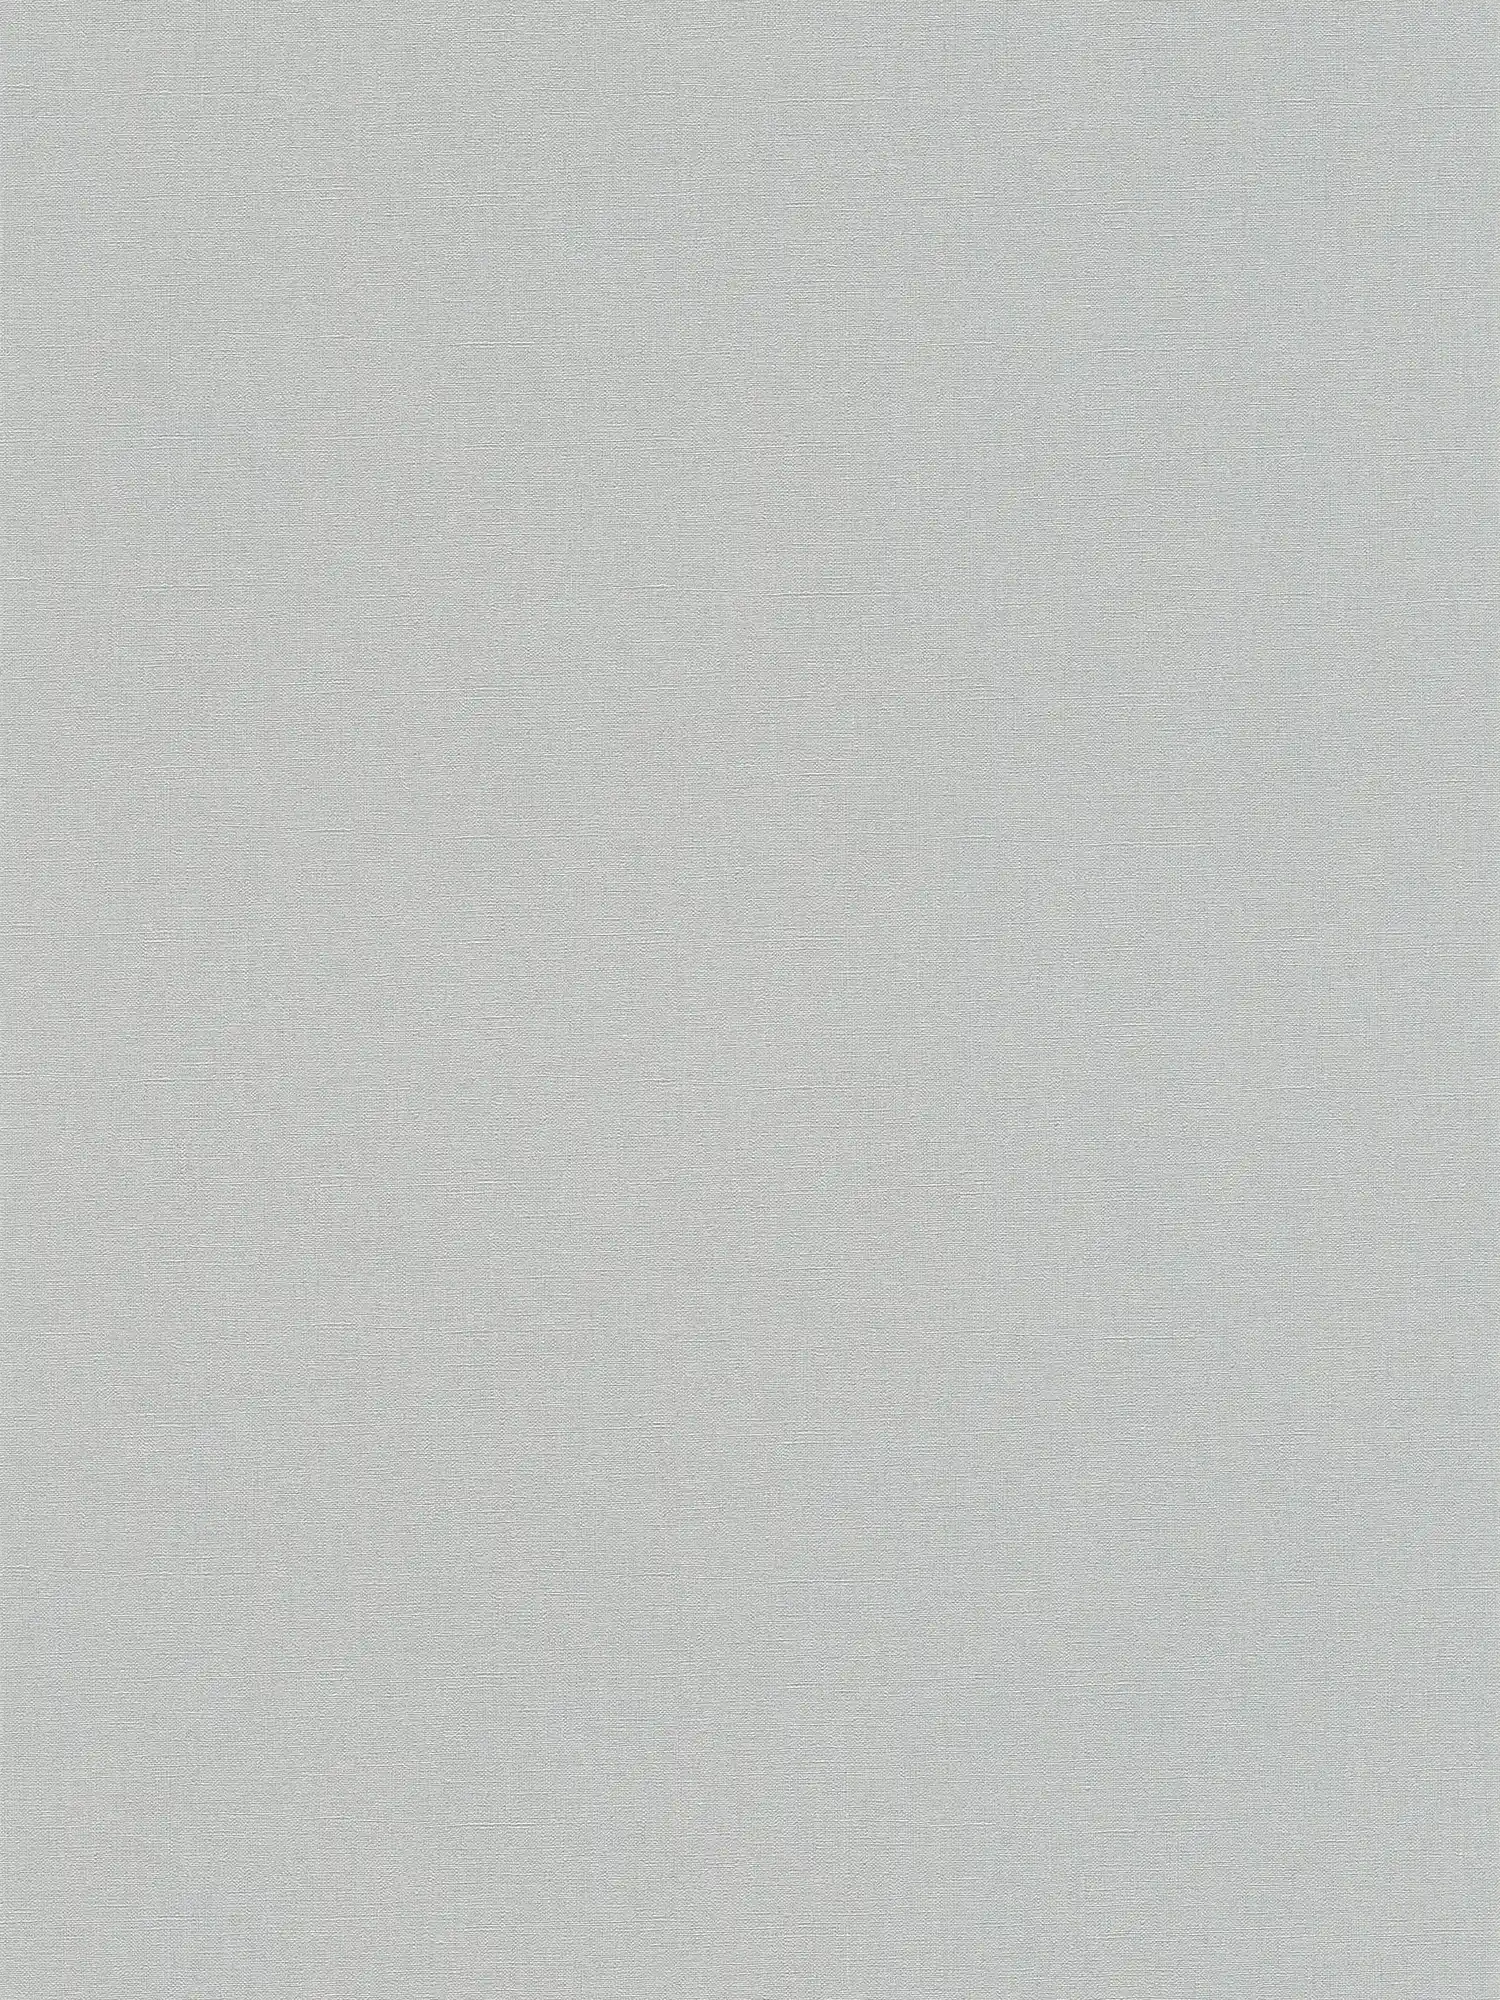 Plain wallpaper with a light textured look - grey, dark grey
